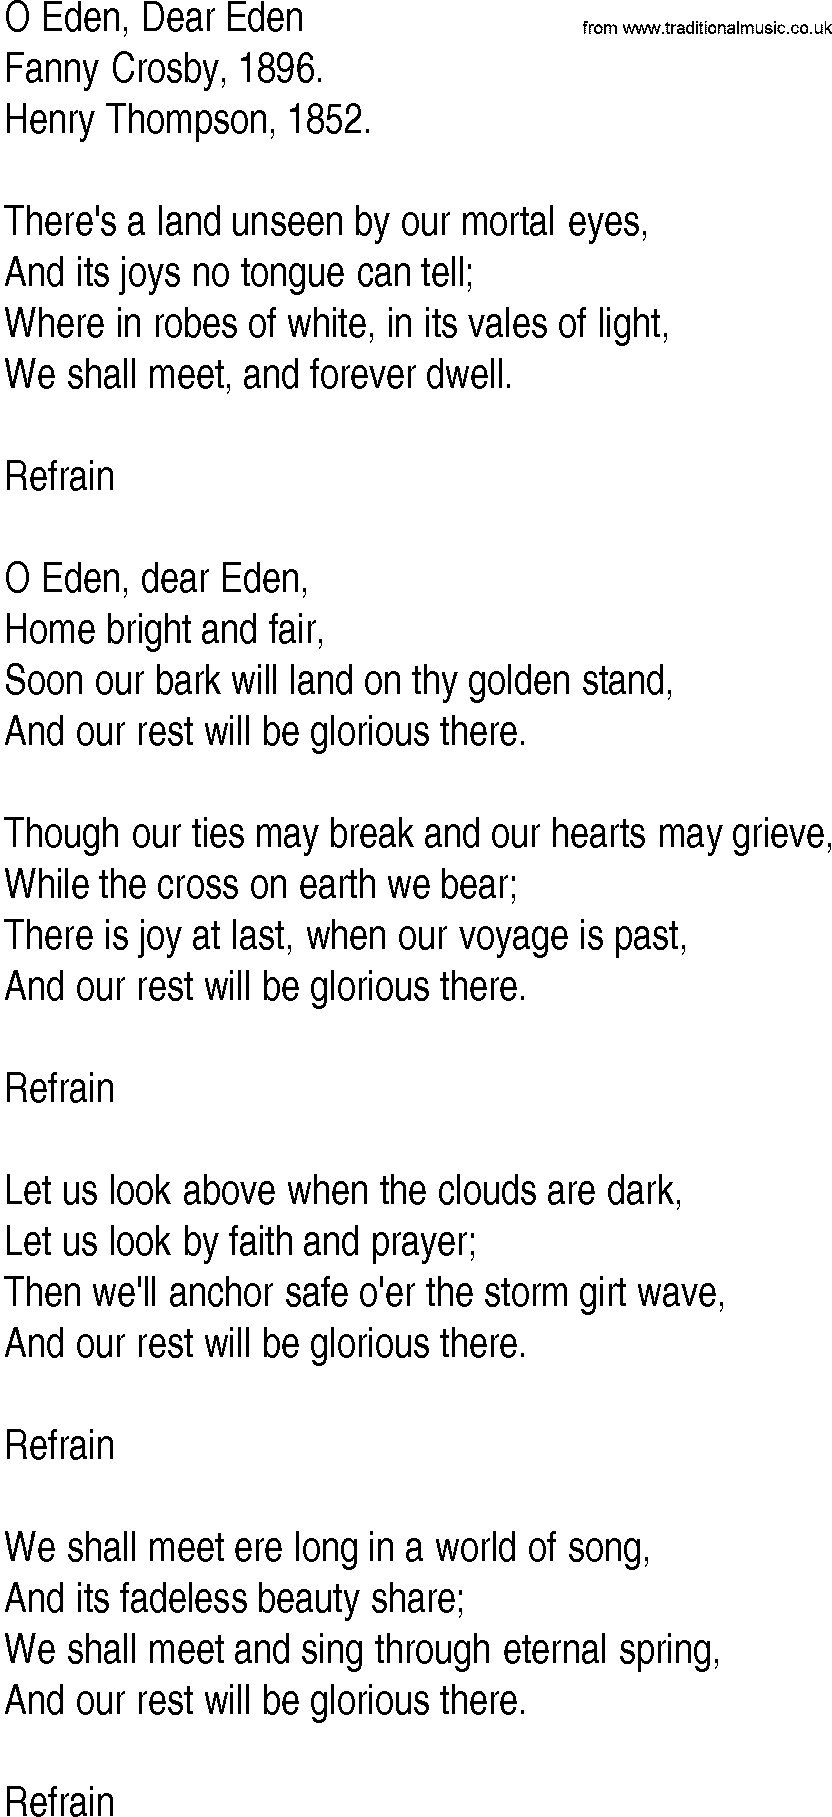 Hymn and Gospel Song: O Eden, Dear Eden by Fanny Crosby lyrics